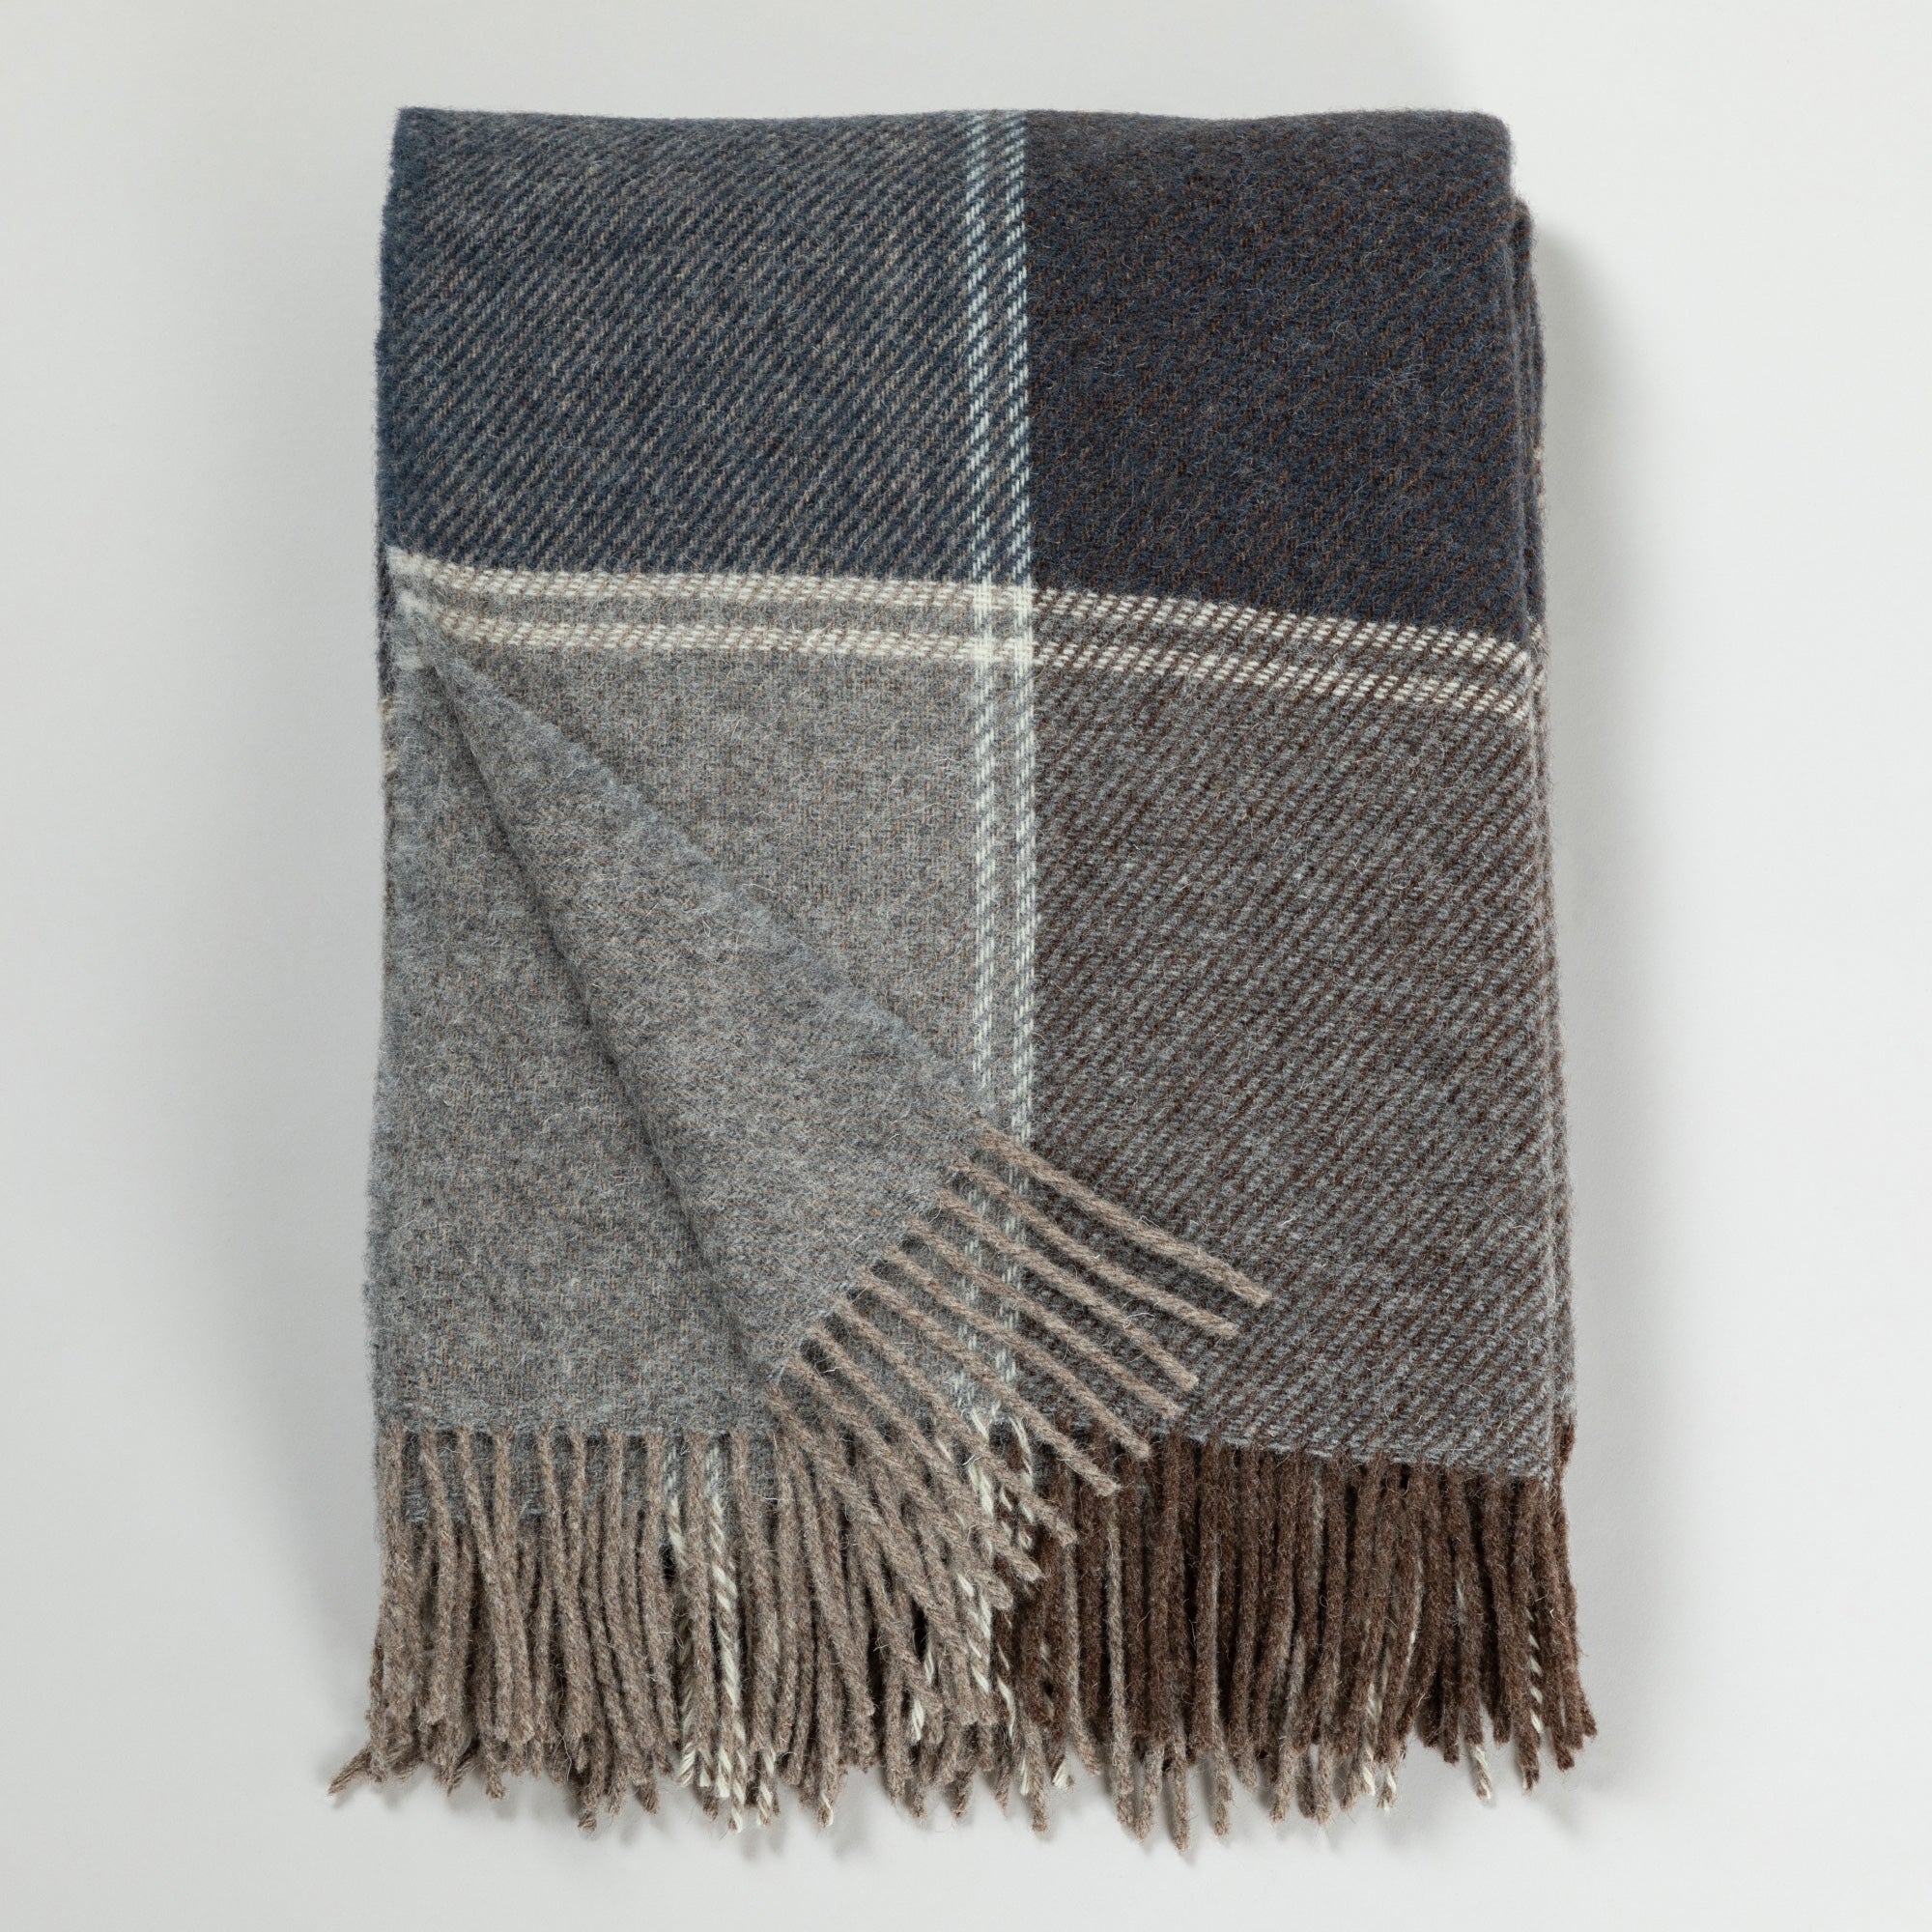 Ukrainian 100% Wool Fringed Throw Blanket - Plaid - Wild Dove Gray